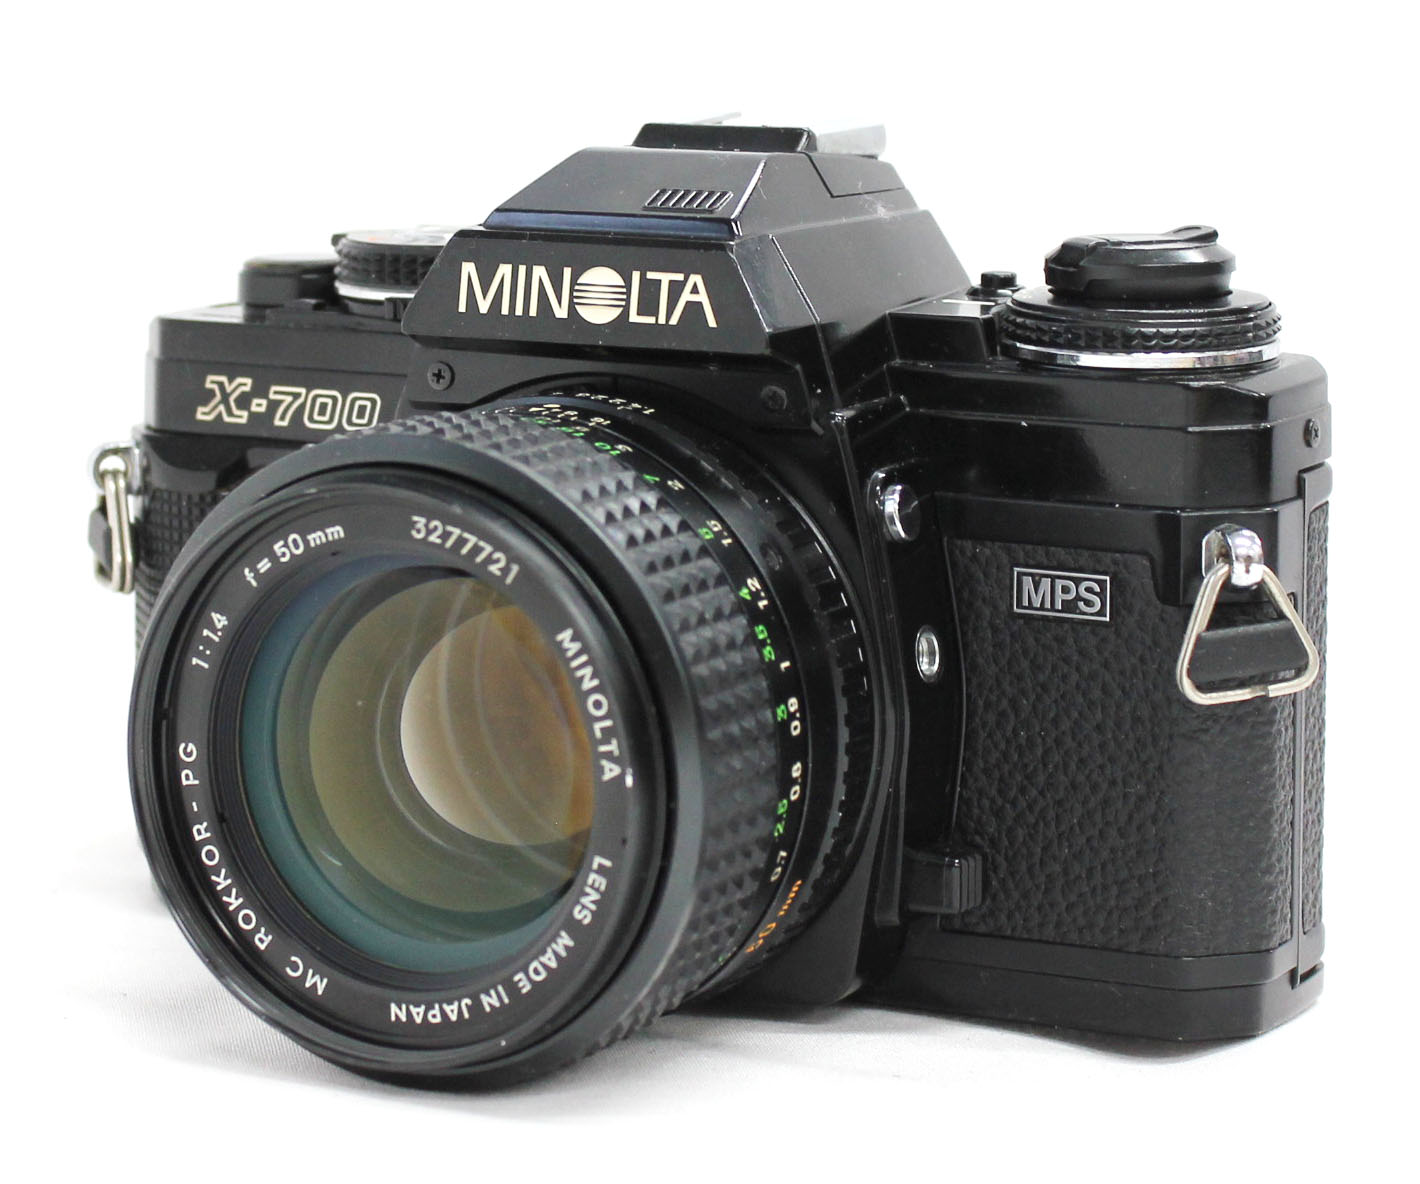 Minolta New X-700 MPS SLR Film Camera with MC Rokkor-PG 50mm F/1.4 Lens from Japan